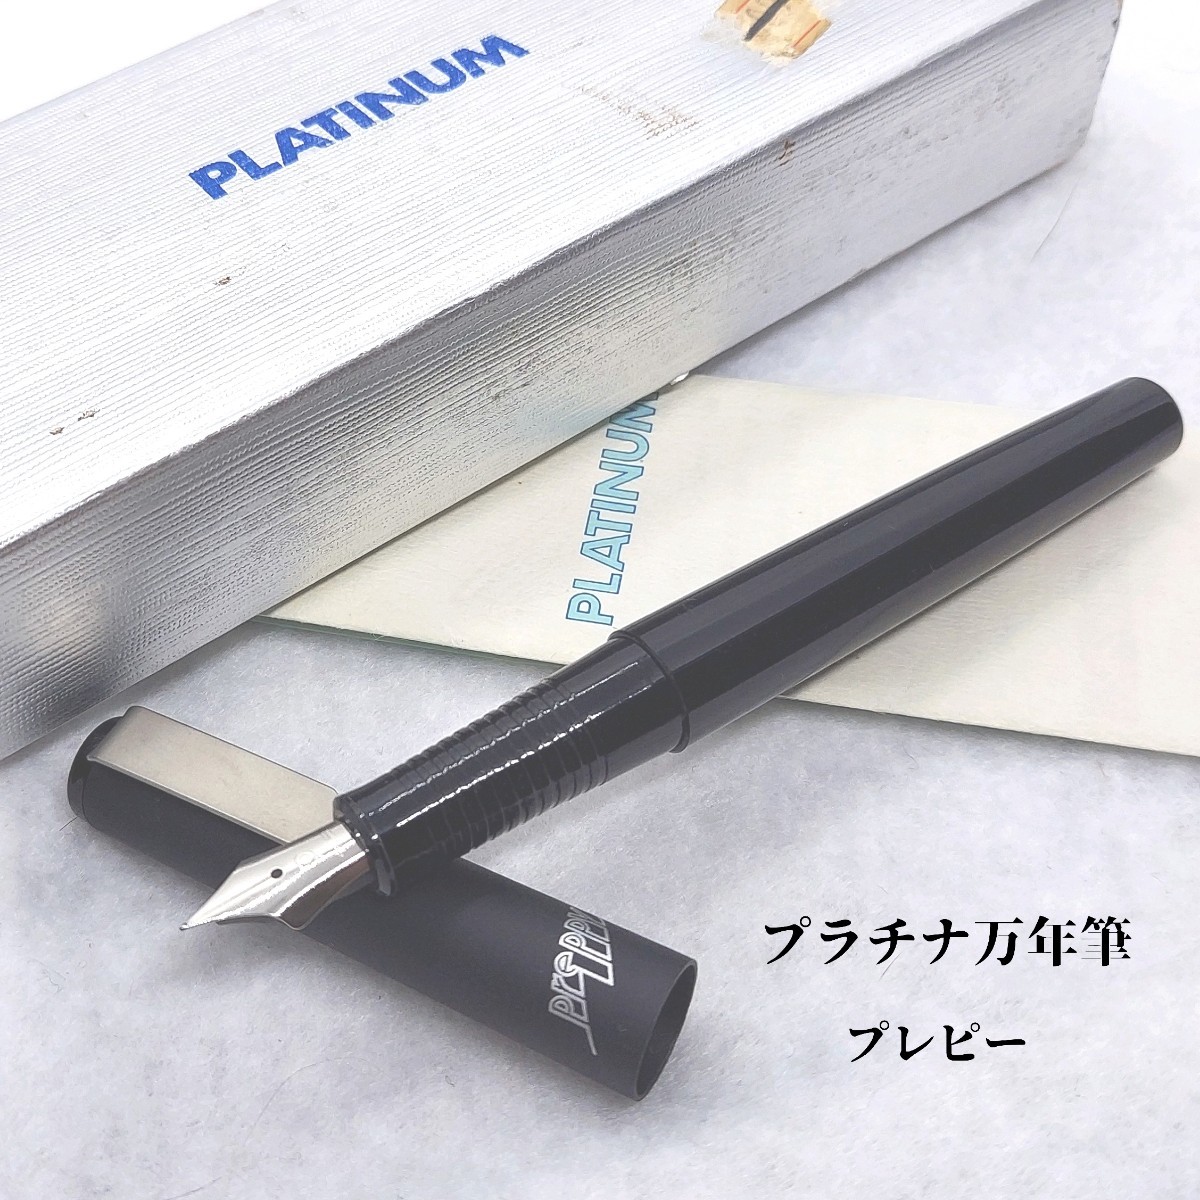  rare goods old model box, instructions attaching platinum fountain pen pre pi-PREPPY fountain pen black axis Vintage 